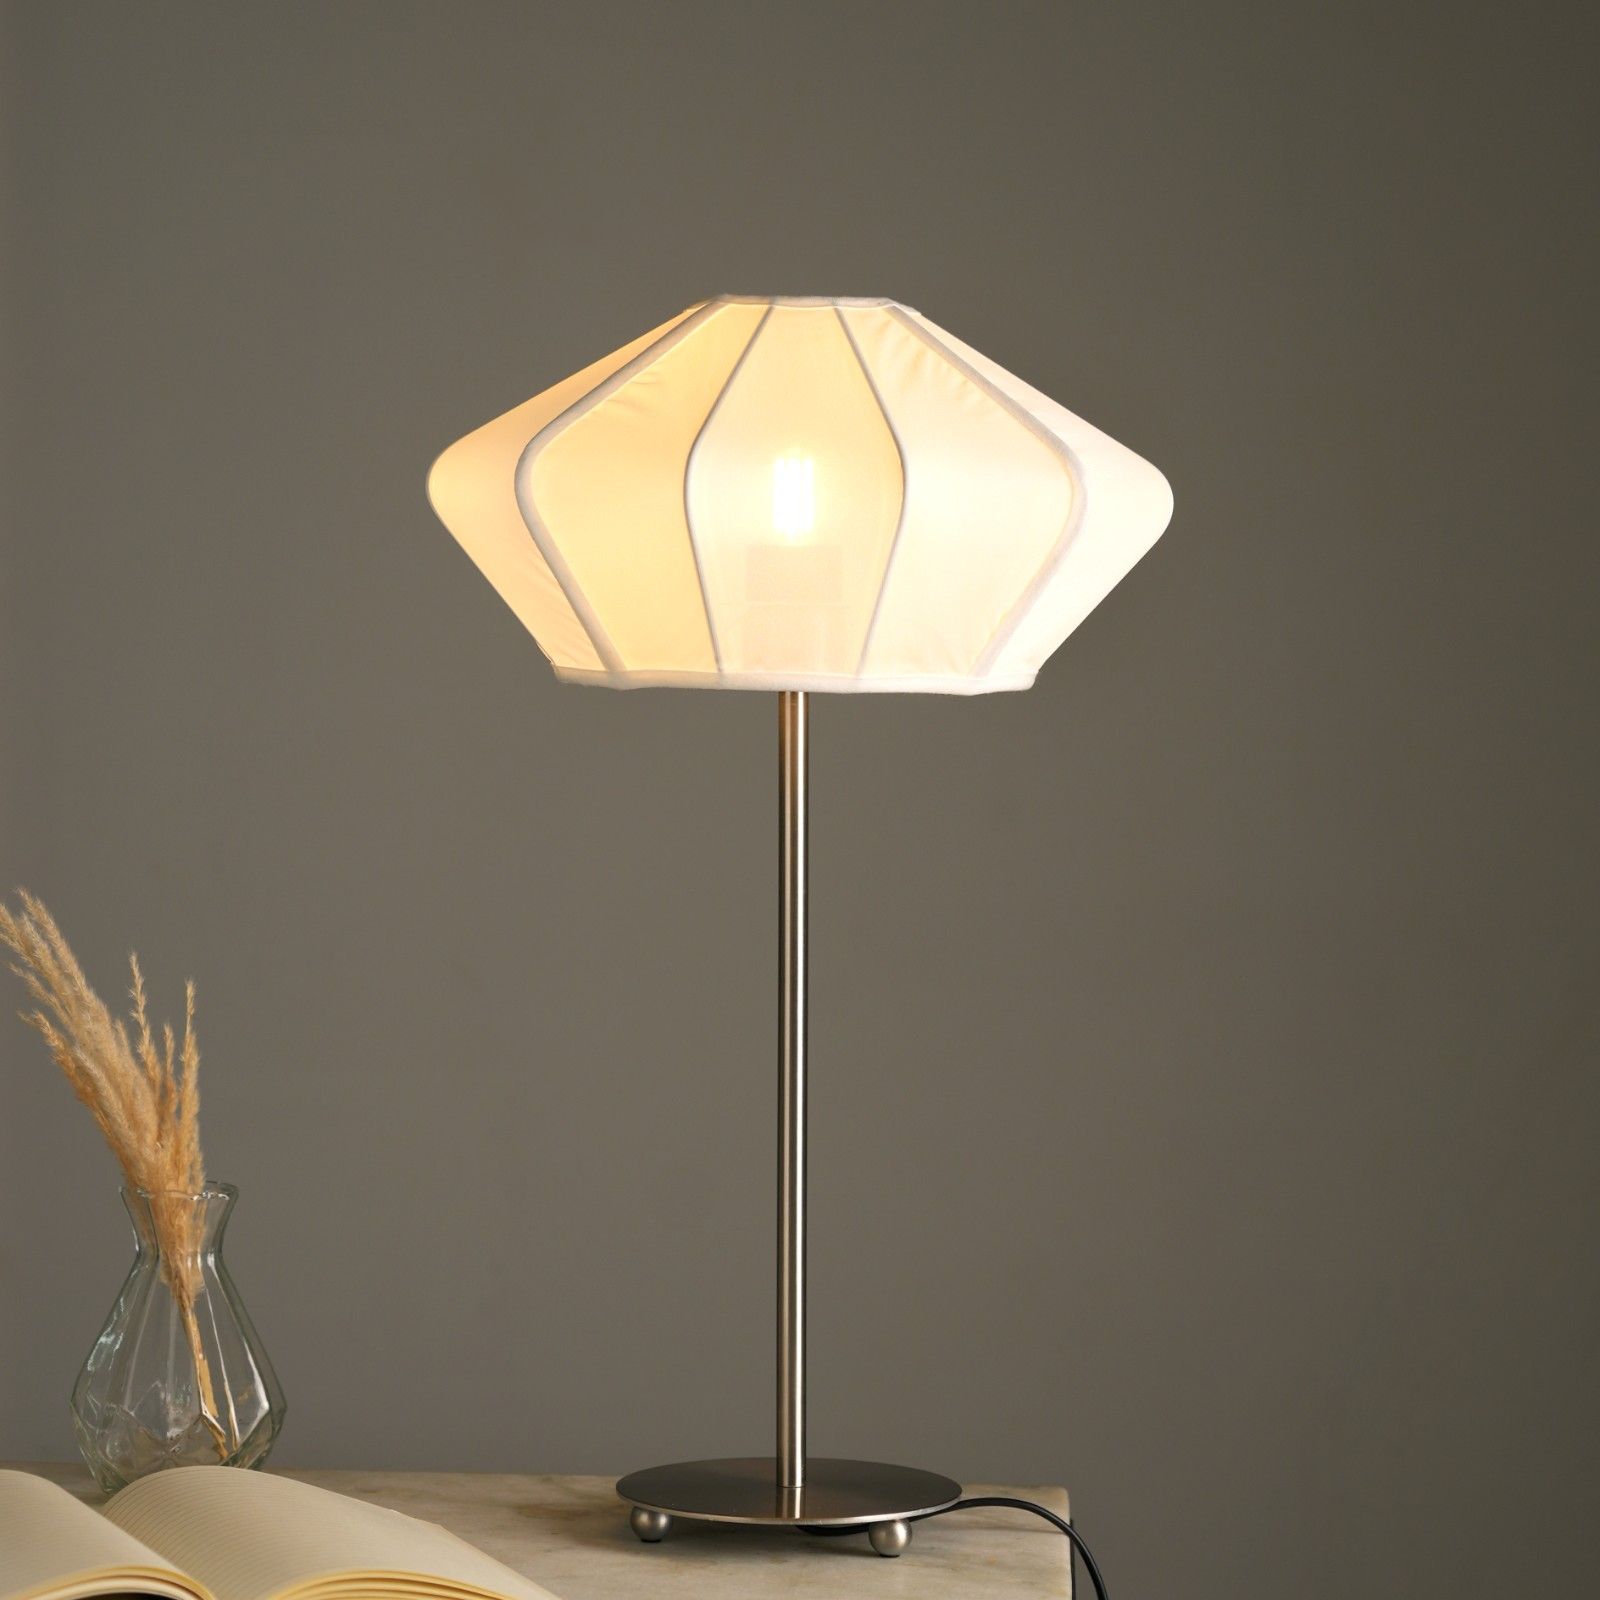 Luxe Collection - Paris Table Lamp (Black) - Premium Chiffon Fabric, Metallic Spacer, Soft Warm Glow, Mood Enhancement Lighting